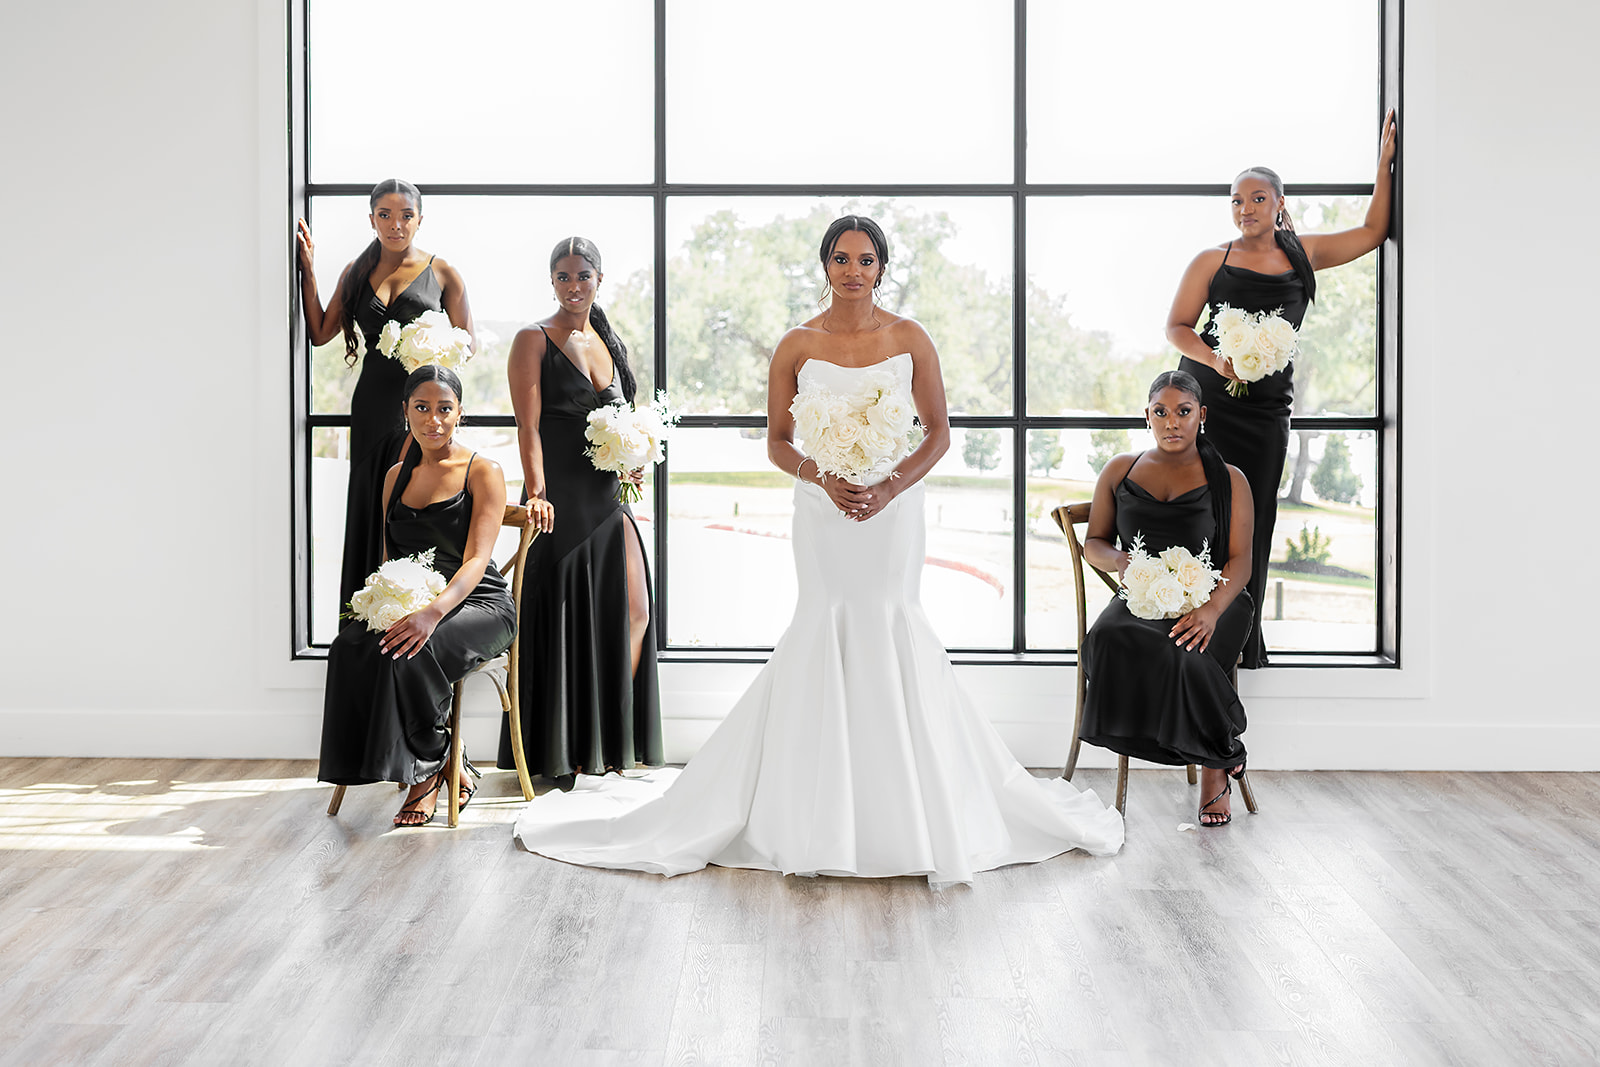 "Joyful bride and bridesmaids, showcasing the success of mastering bridesmaids duties with Hayden & Co. Events."